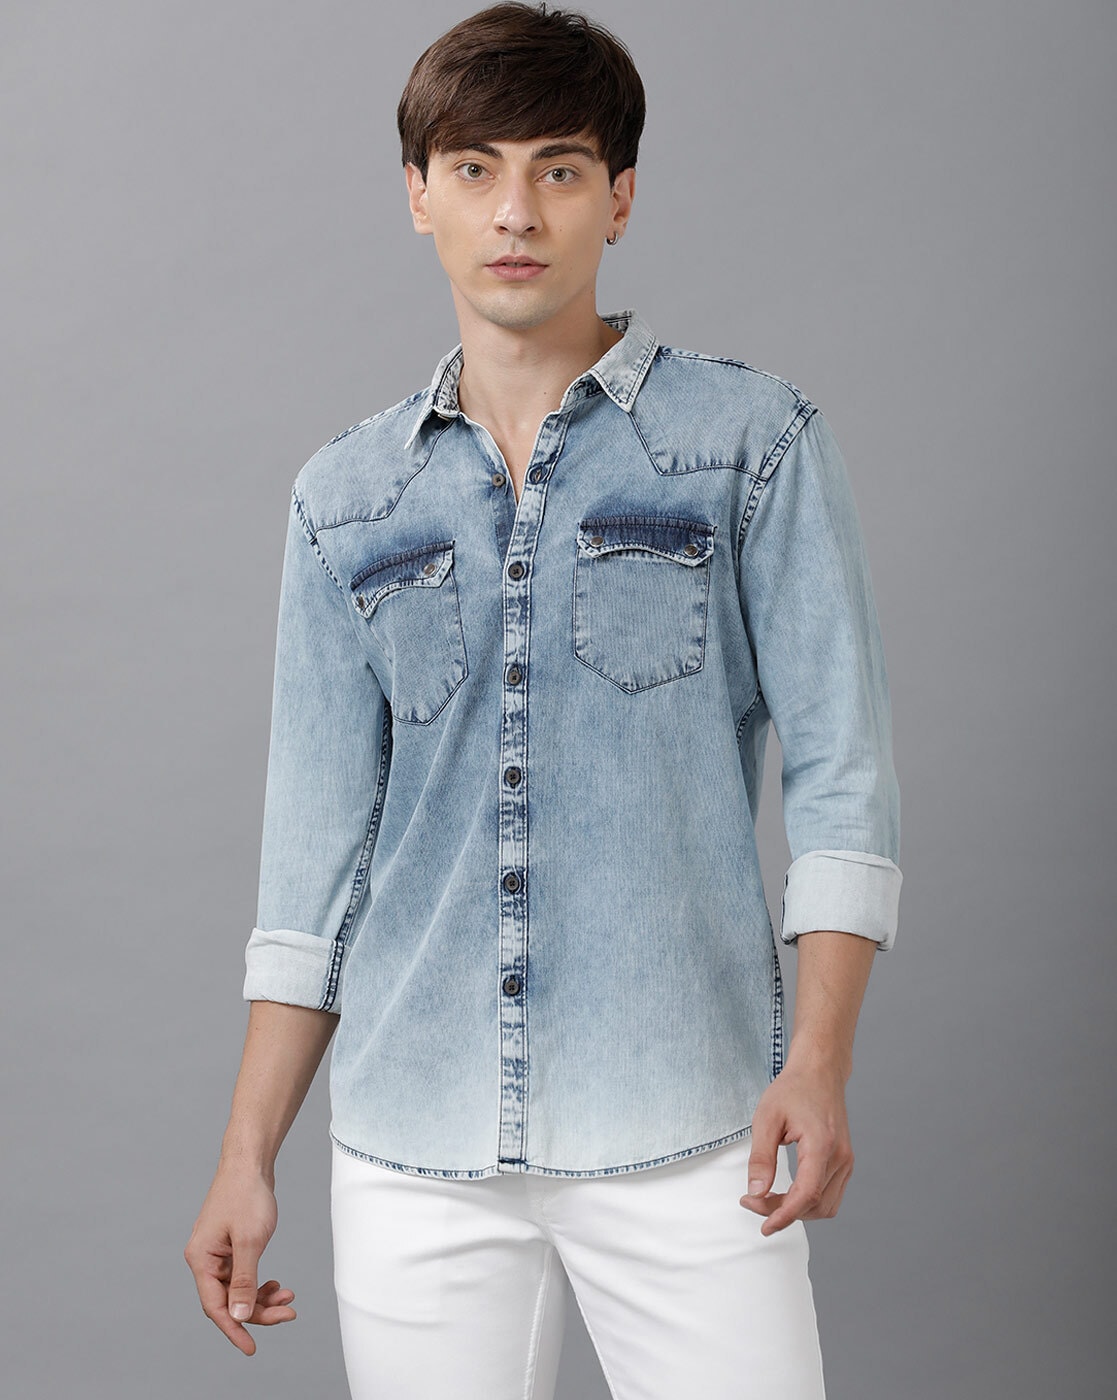 Shop Ice Blue Jeans Shirt for Men Online at Great Price – Badmaash